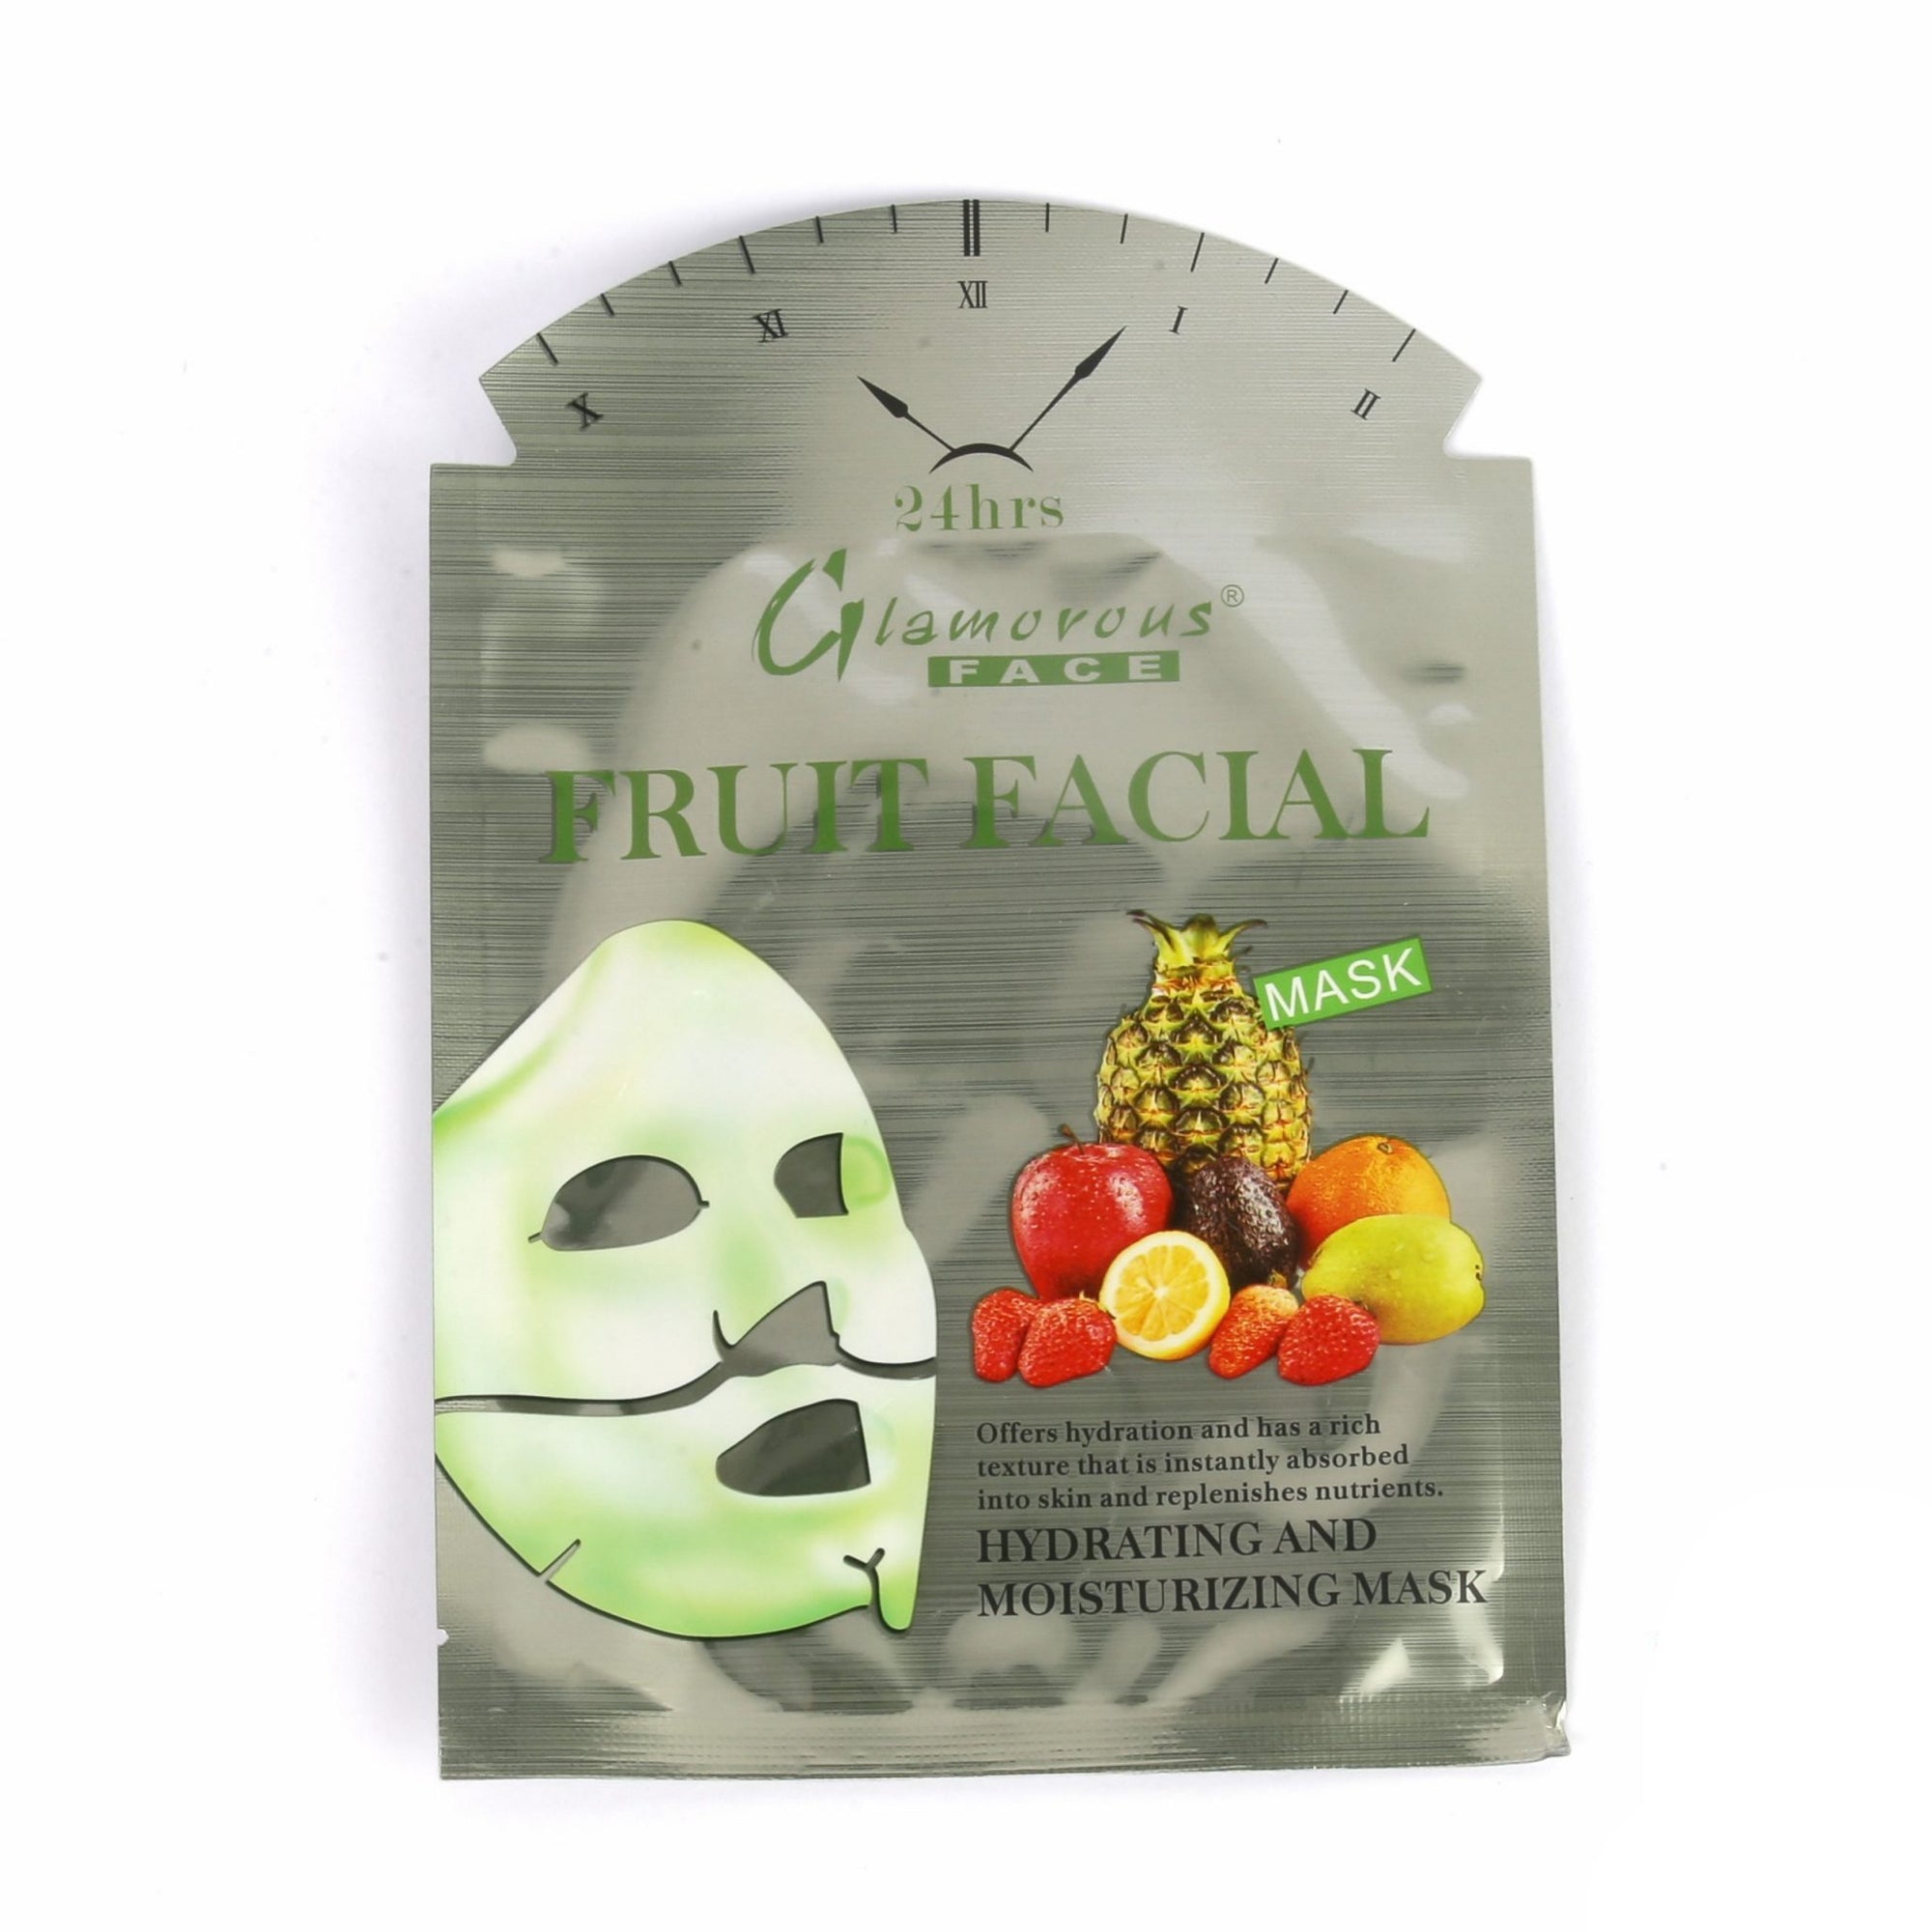 Glamorous Face Hydrating and Moisturizing Mask Fruit Facial Sheet Mask GF7878D freeshipping - lasertag.pk